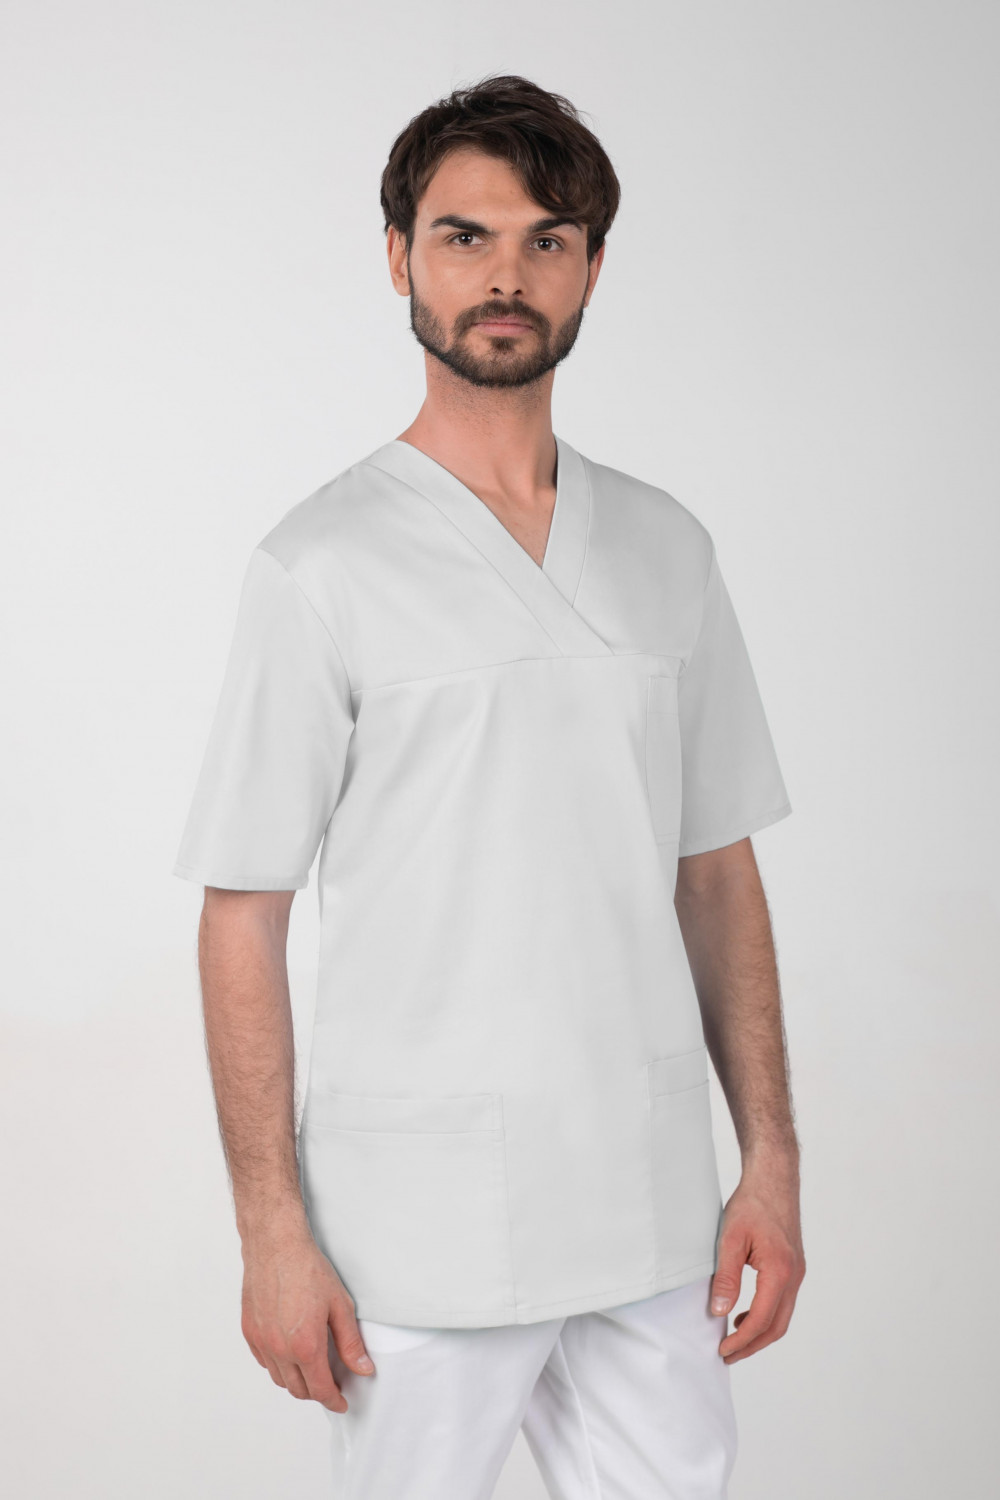 M-074CX Elastyczna bluza medyczna męska chirurgiczna szary